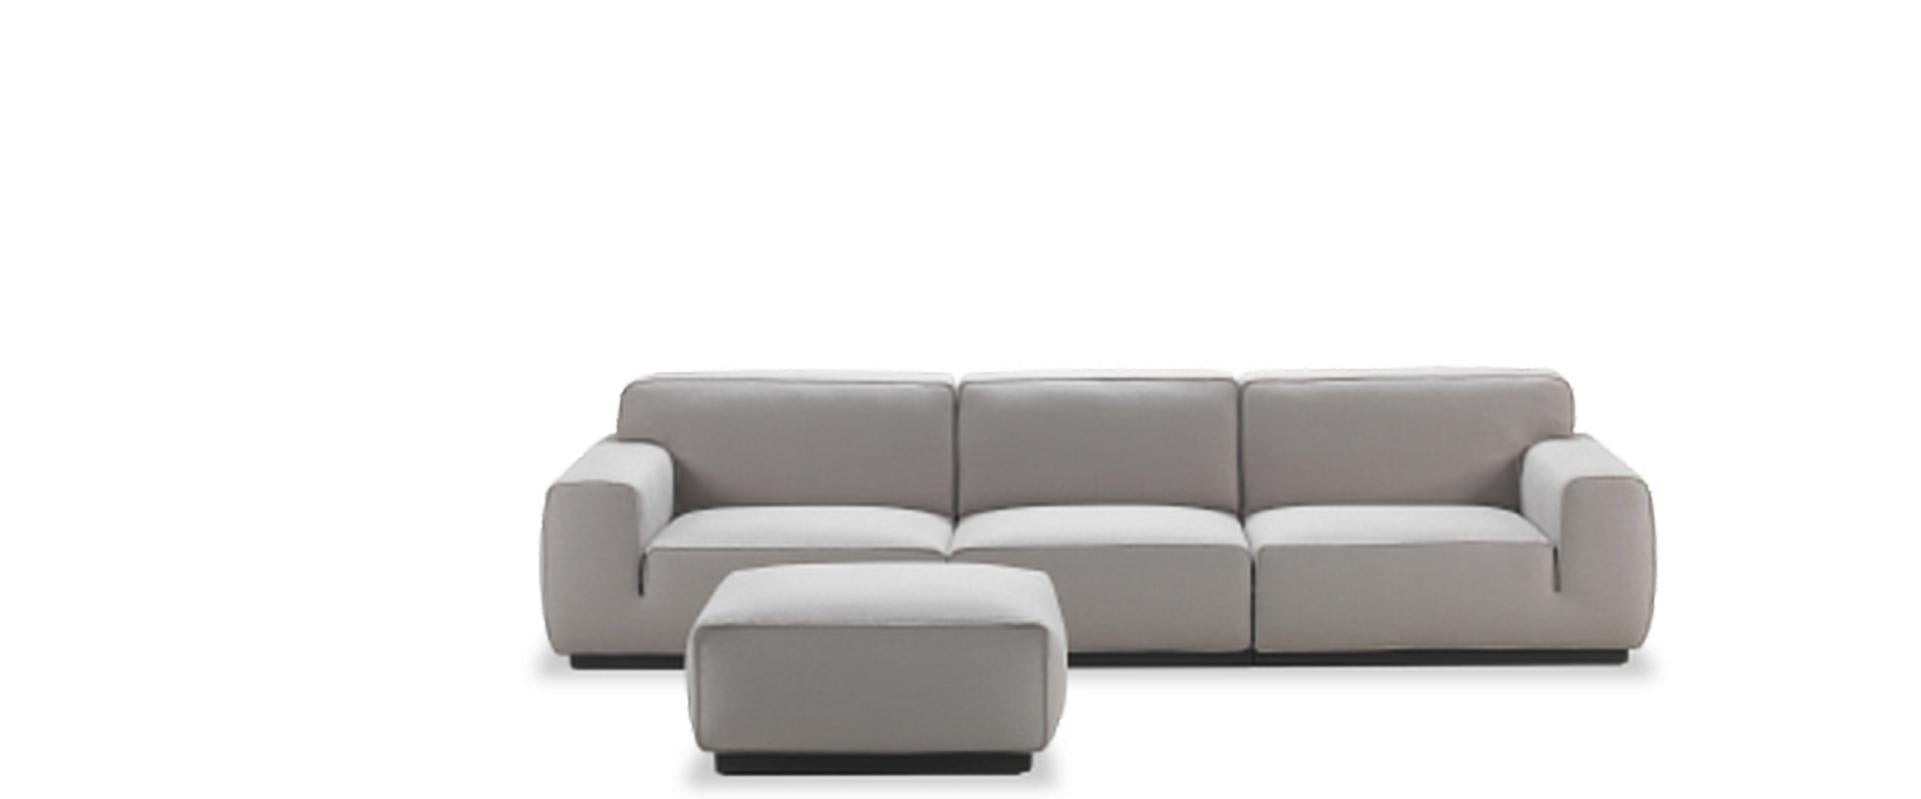 A modular sofa with soft pastel grey padding and neat seam line.